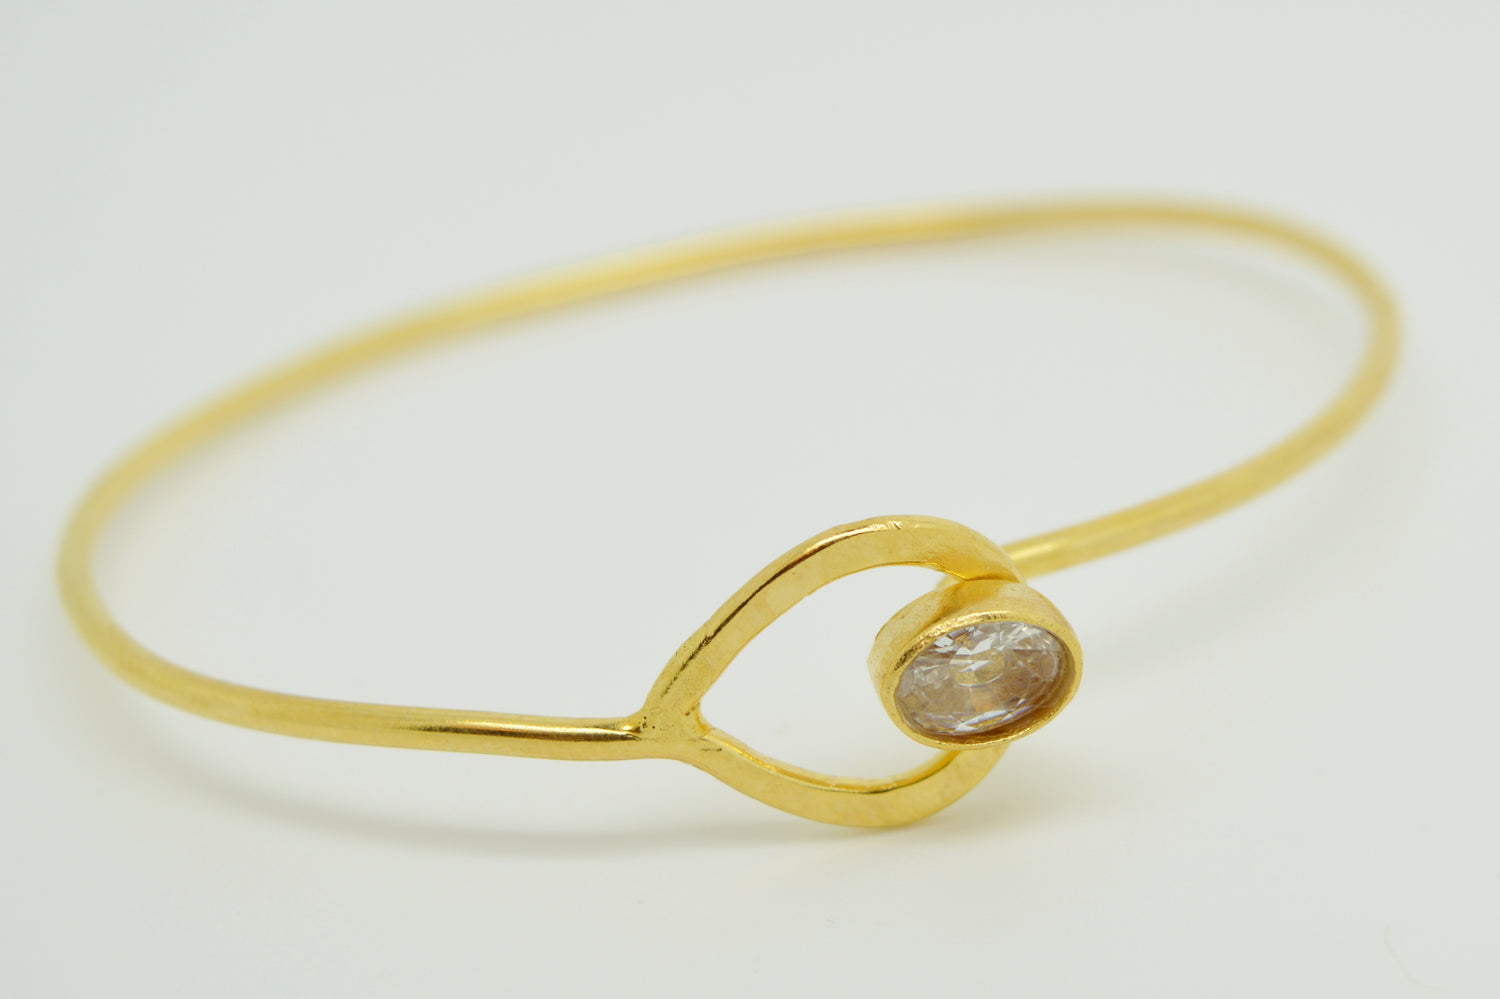 Aylas Crystal Zircon cuff/ bracelet - Gold plated semi precious gemstone - Handmade in Ottoman Style